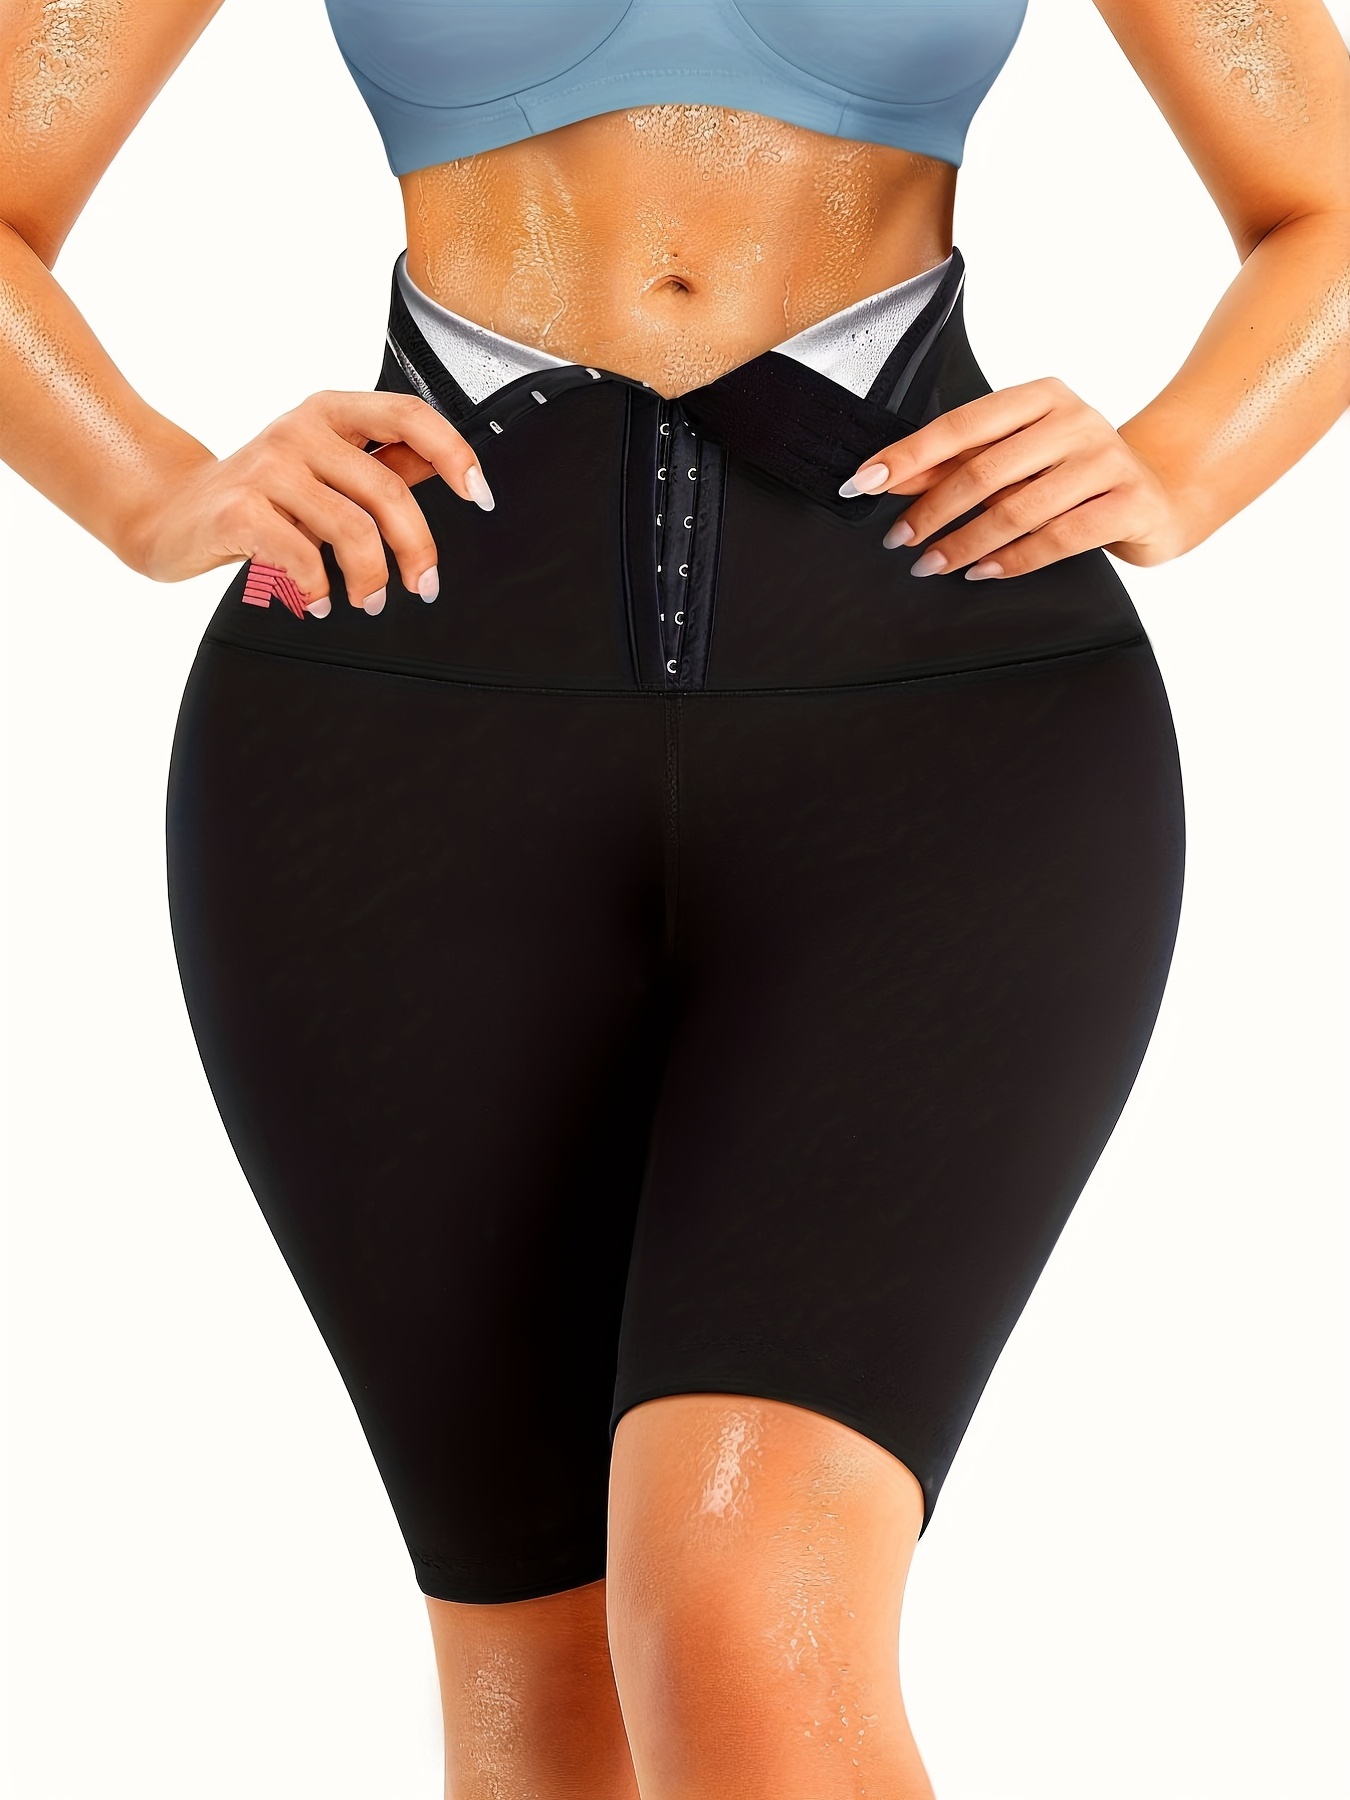 Sauna Sweat Pants For Women High Waist Slimming Waist Trainer